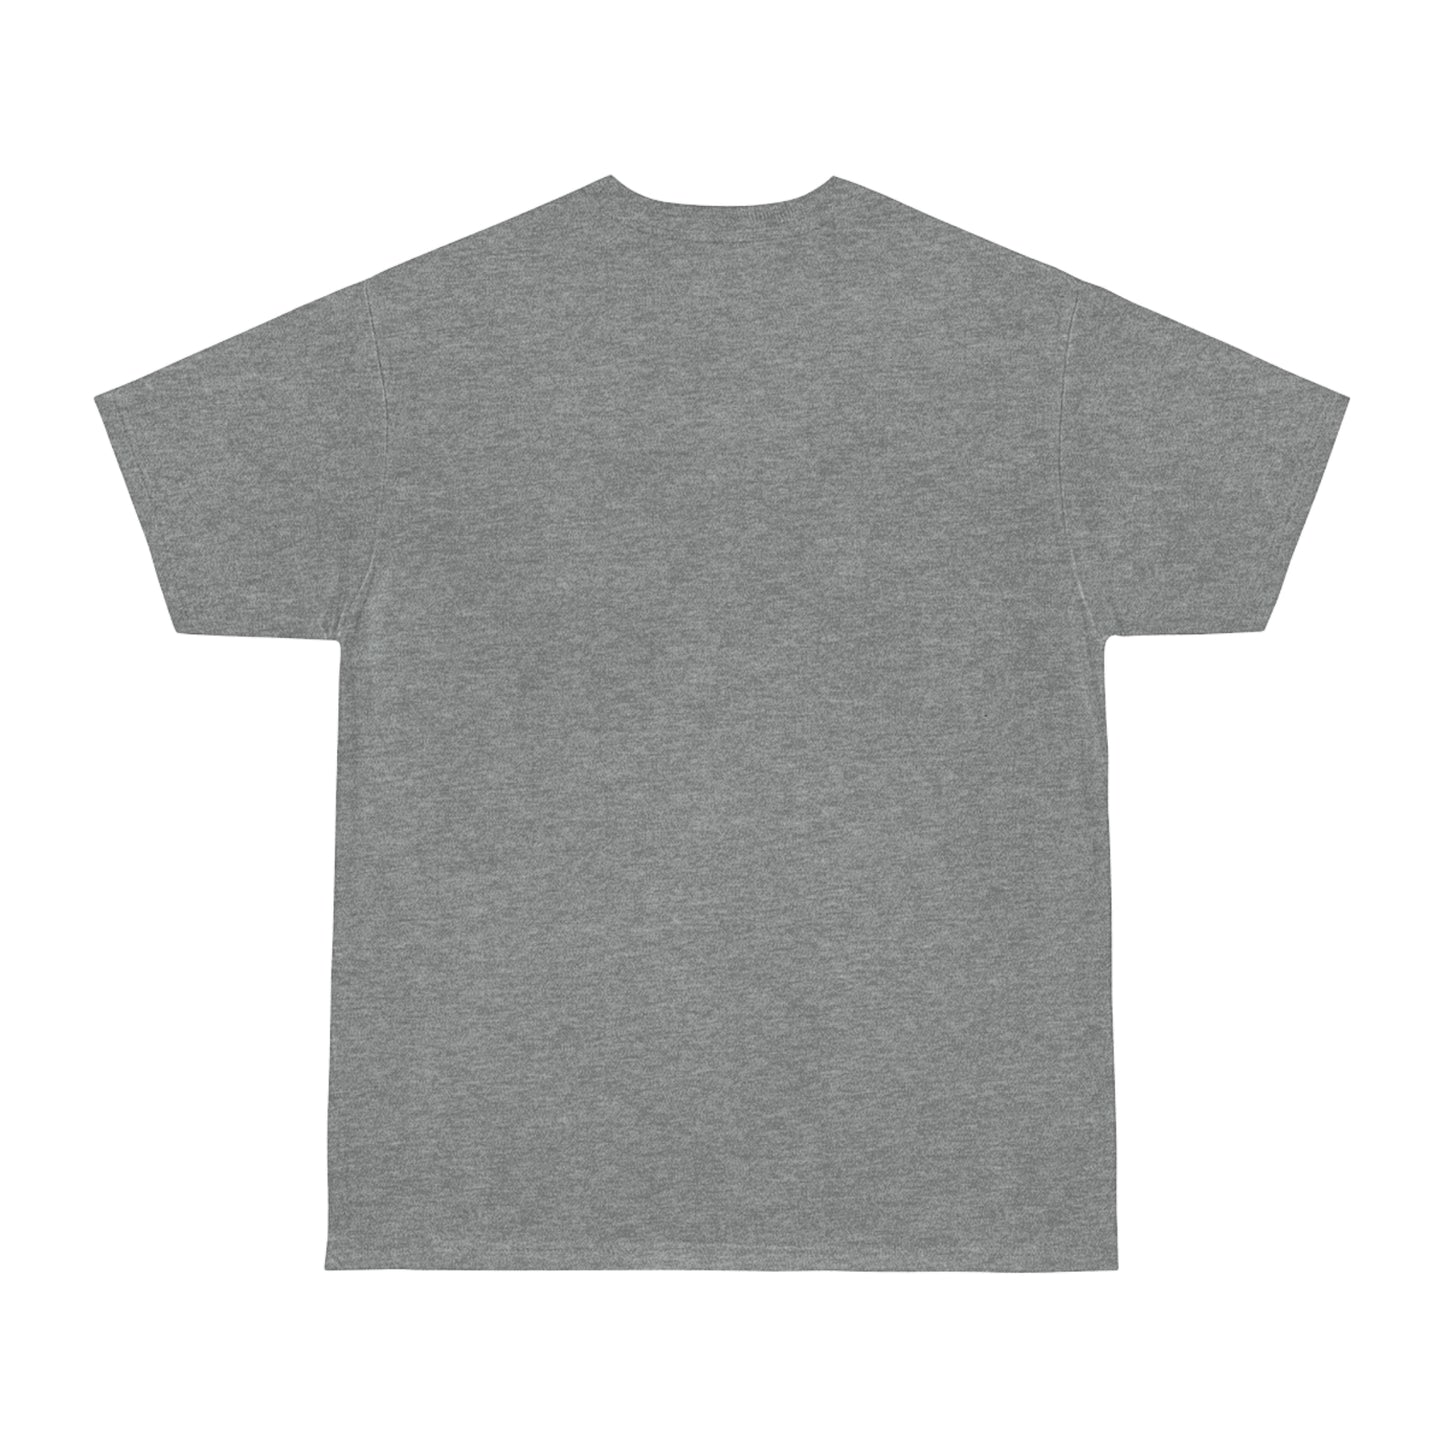 Mountain Biking Hammer™ T-shirt Pre-Shrunk Cotton